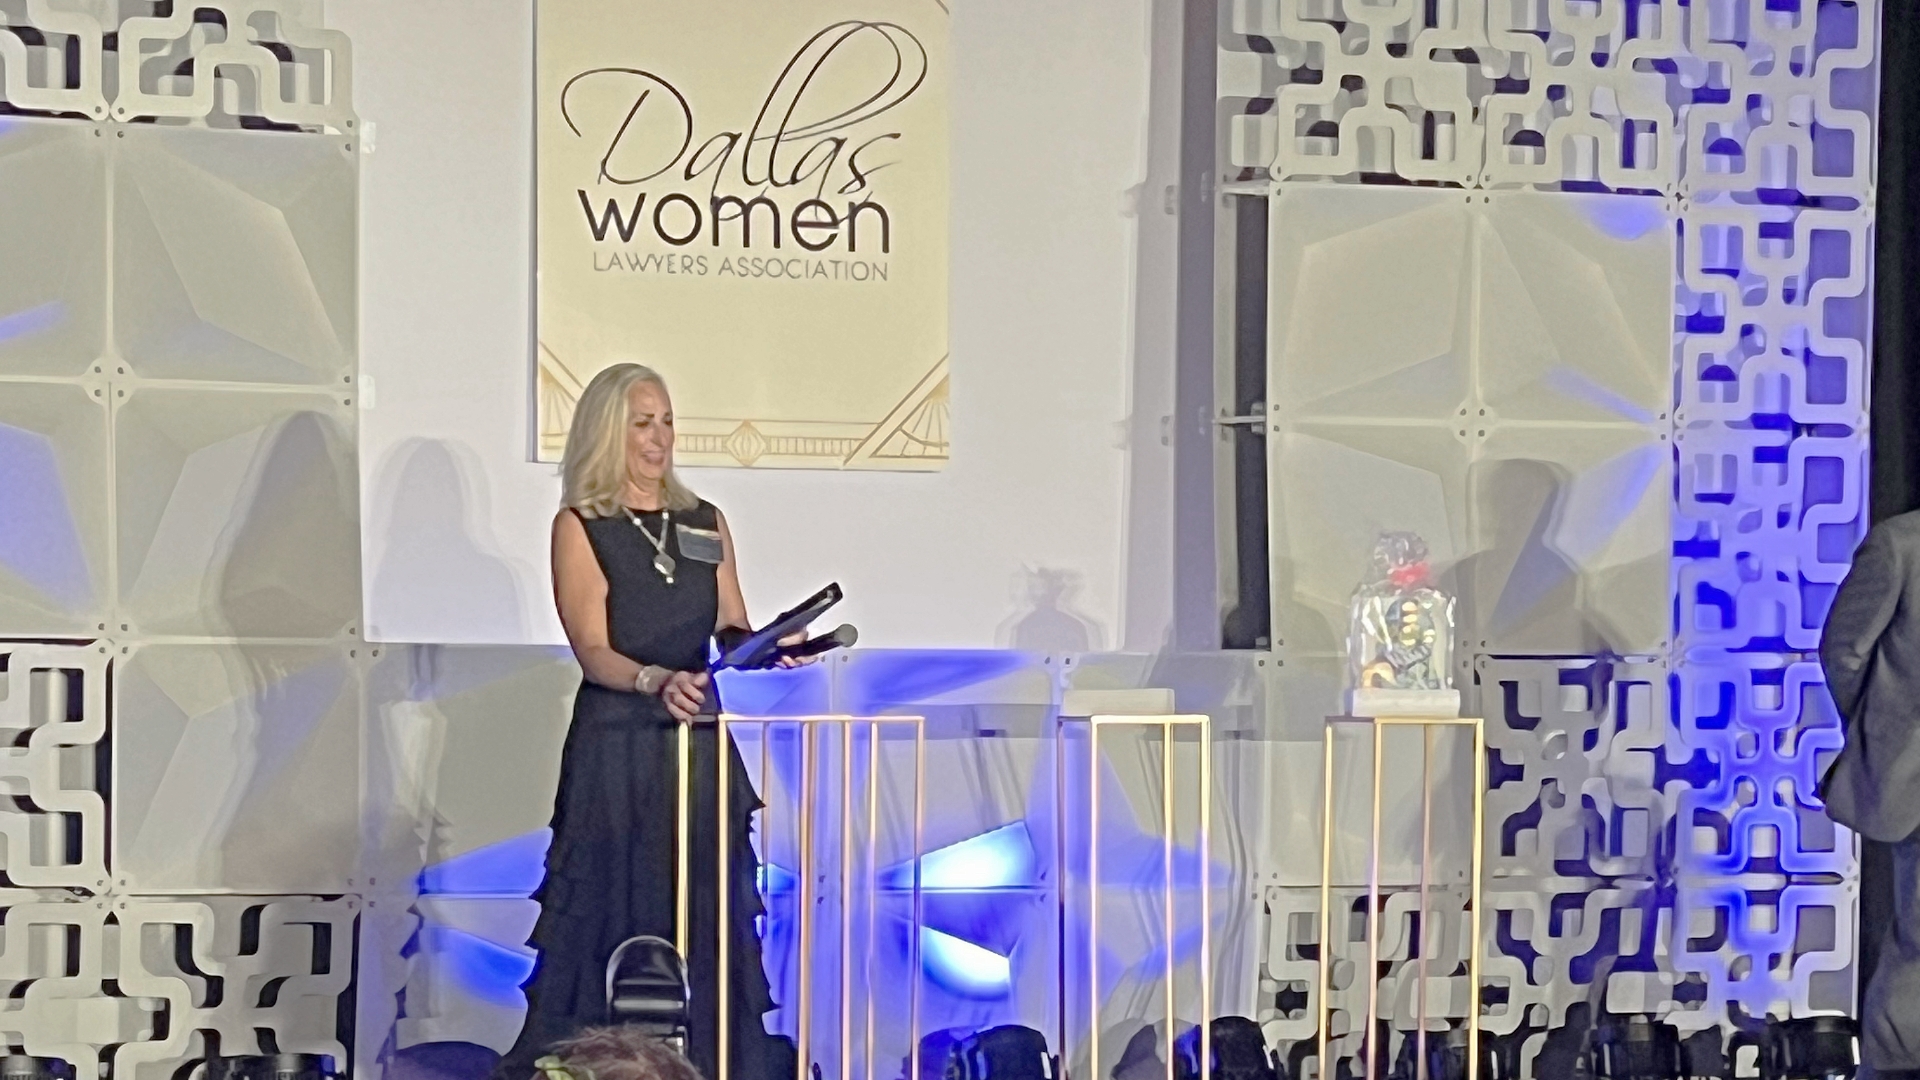 Professor Liz Fraley accepts the Raggio Award on the platform at the Dallas Women Lawyer's Reception.